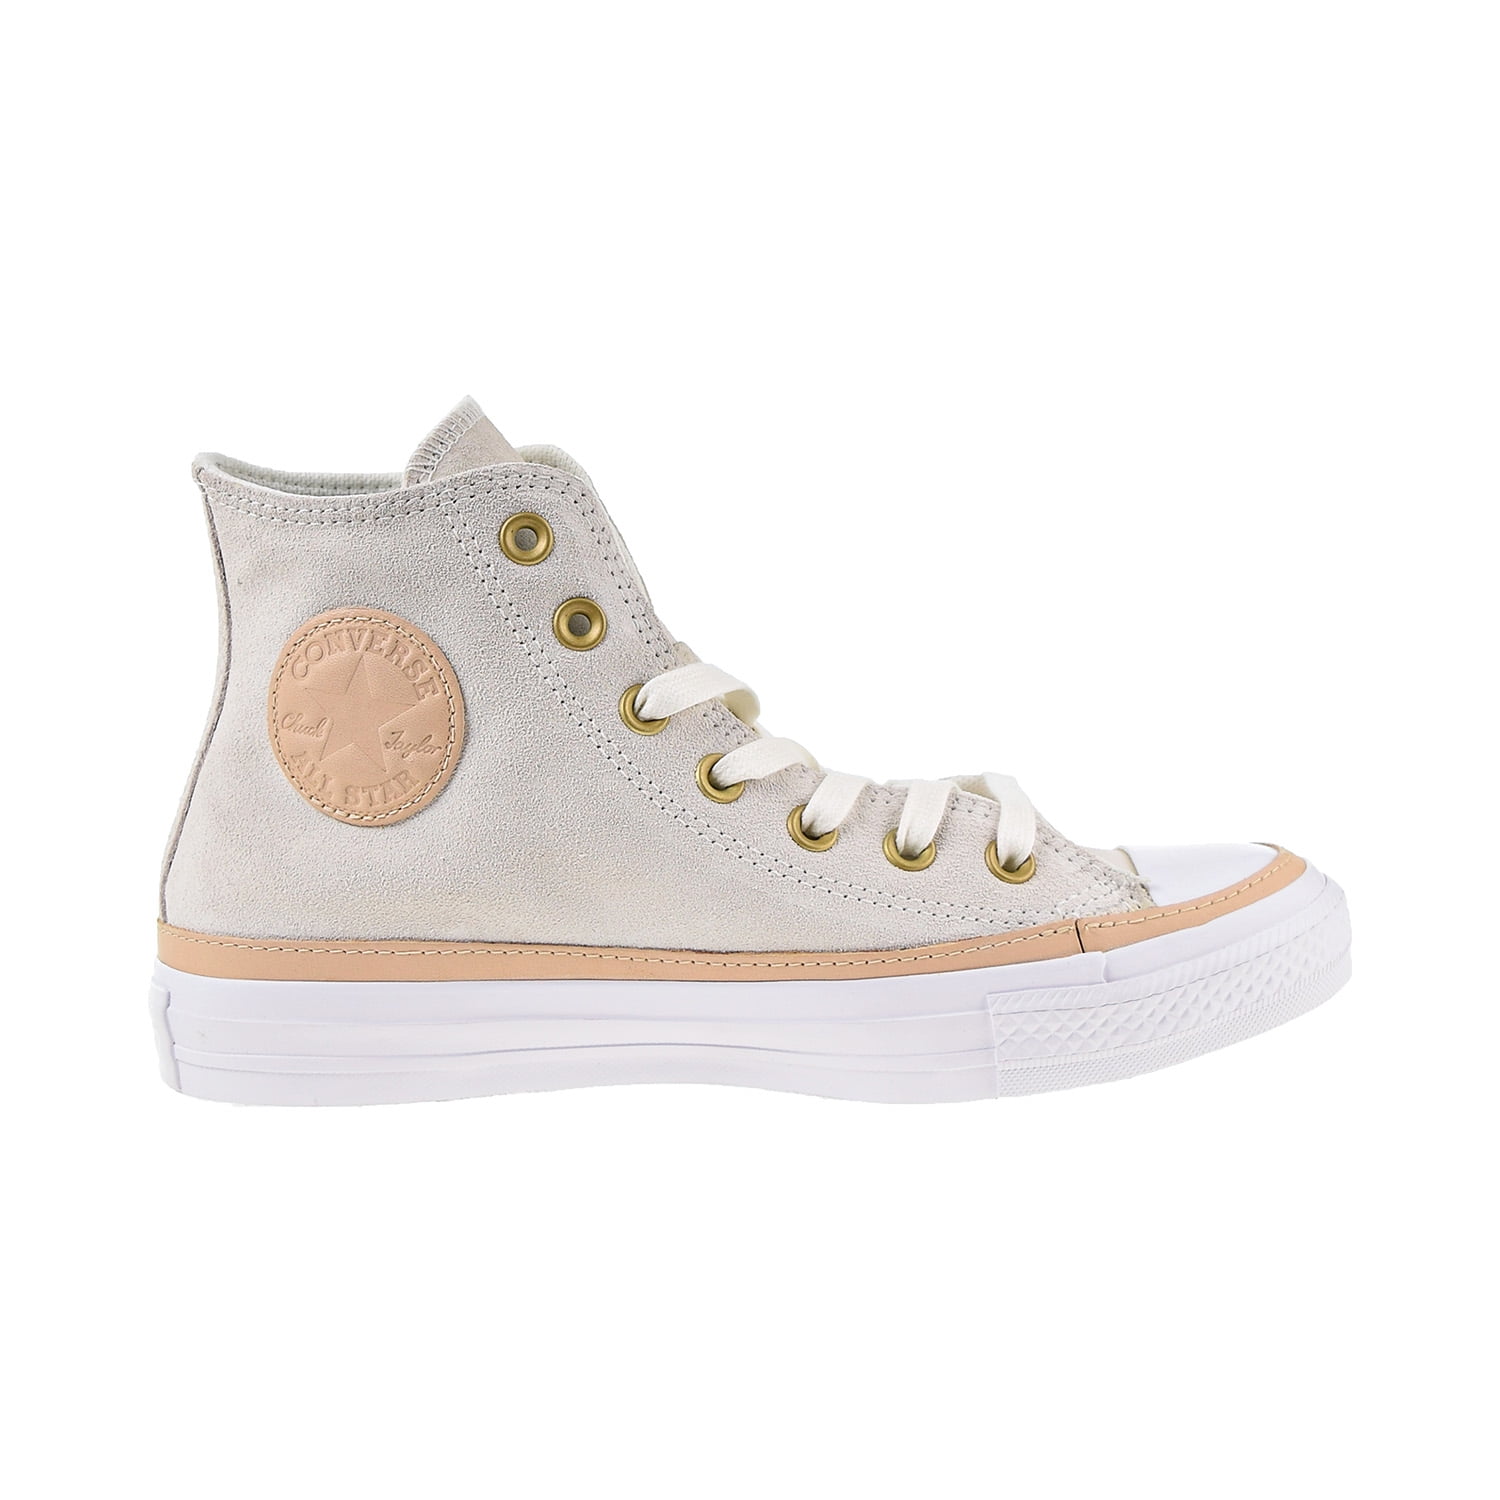 Converse Chuck All Star Hi Men's Shoes Vintage White-Vachetta-White 165921c